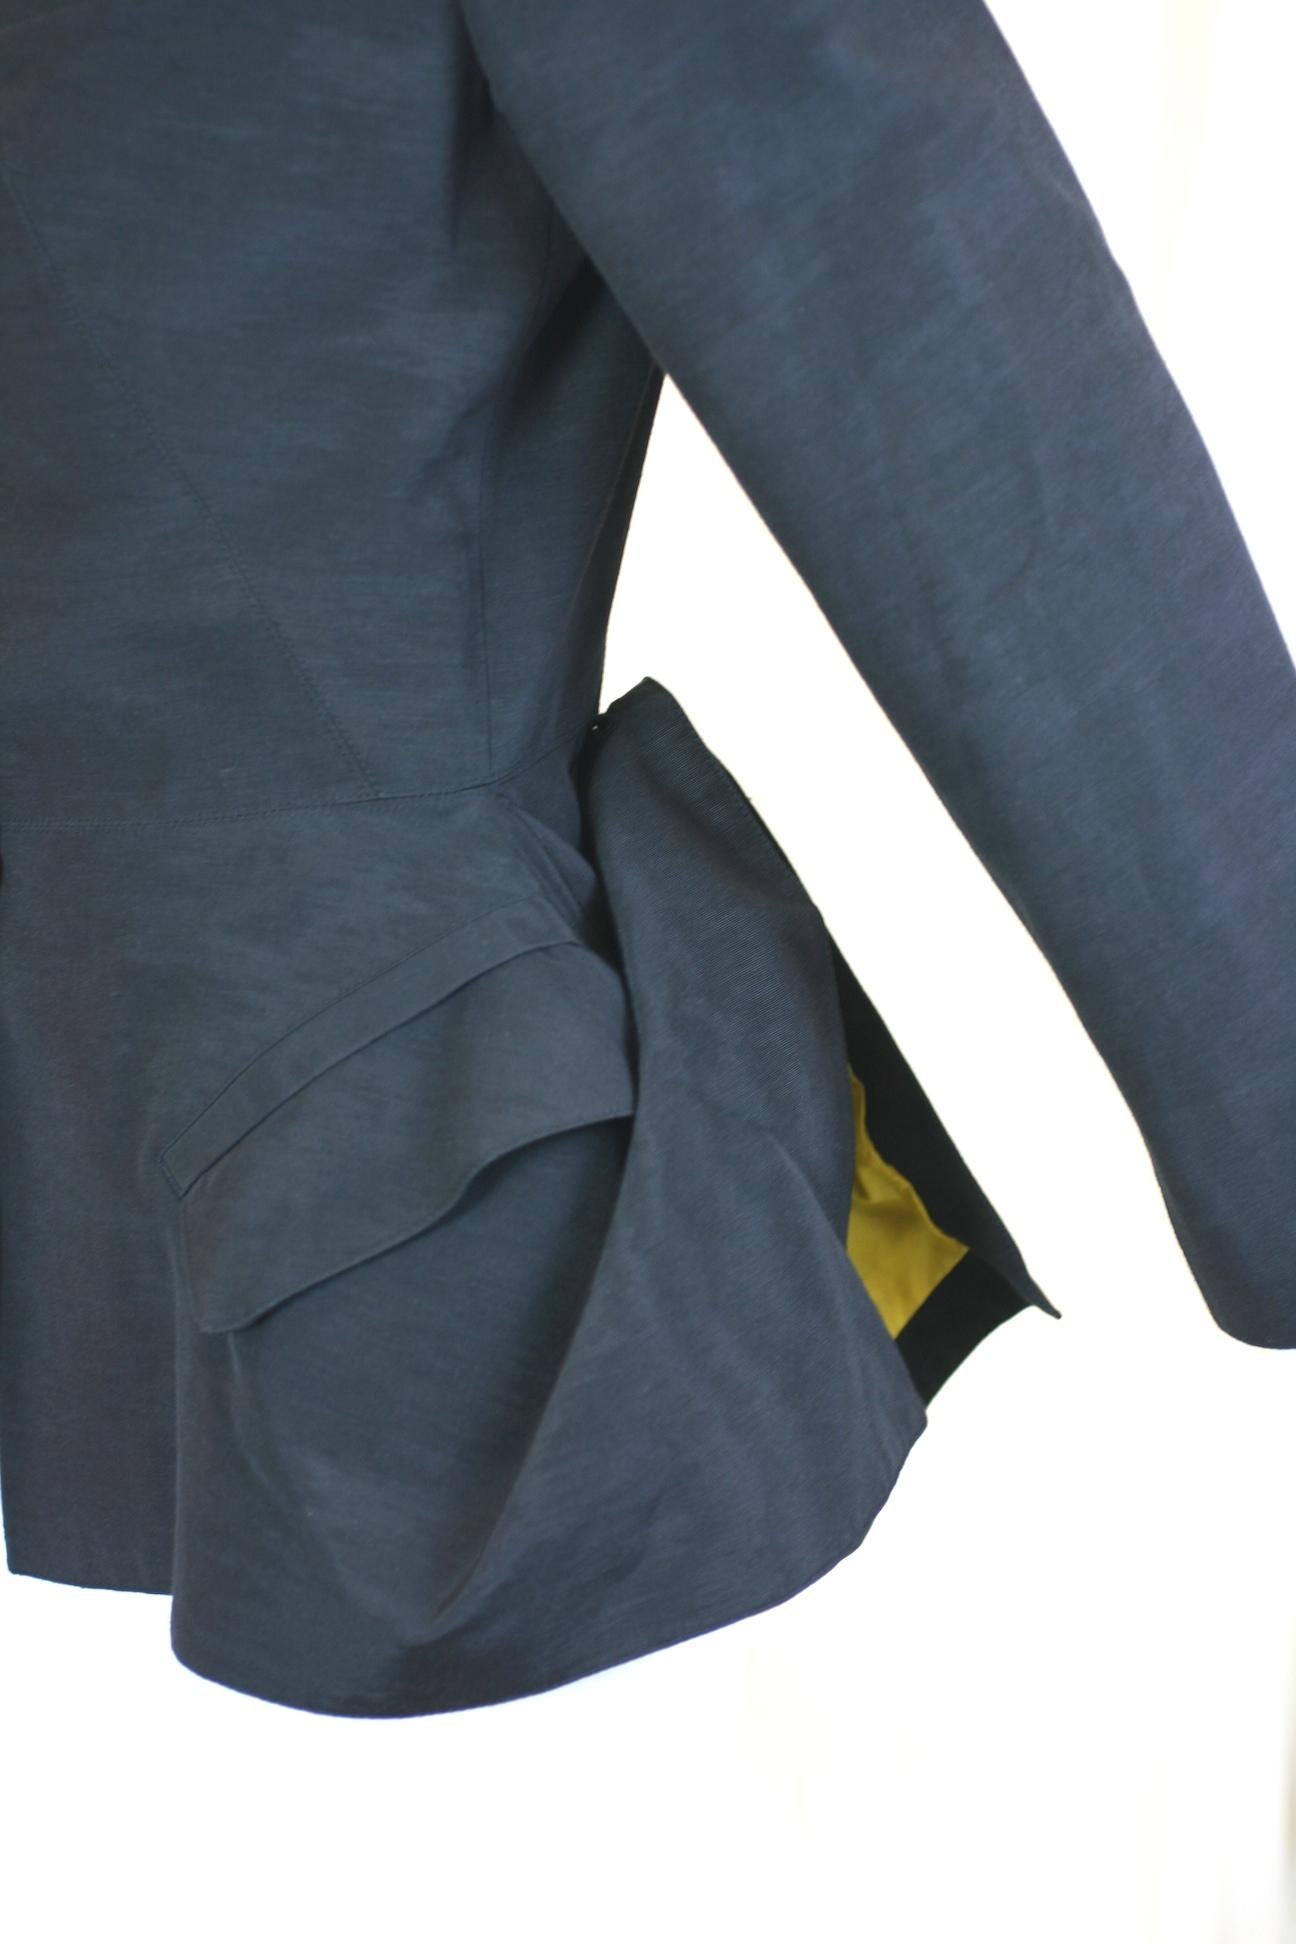 Jean Paul Gaultier Transformable Peplum Jacket For Sale 1